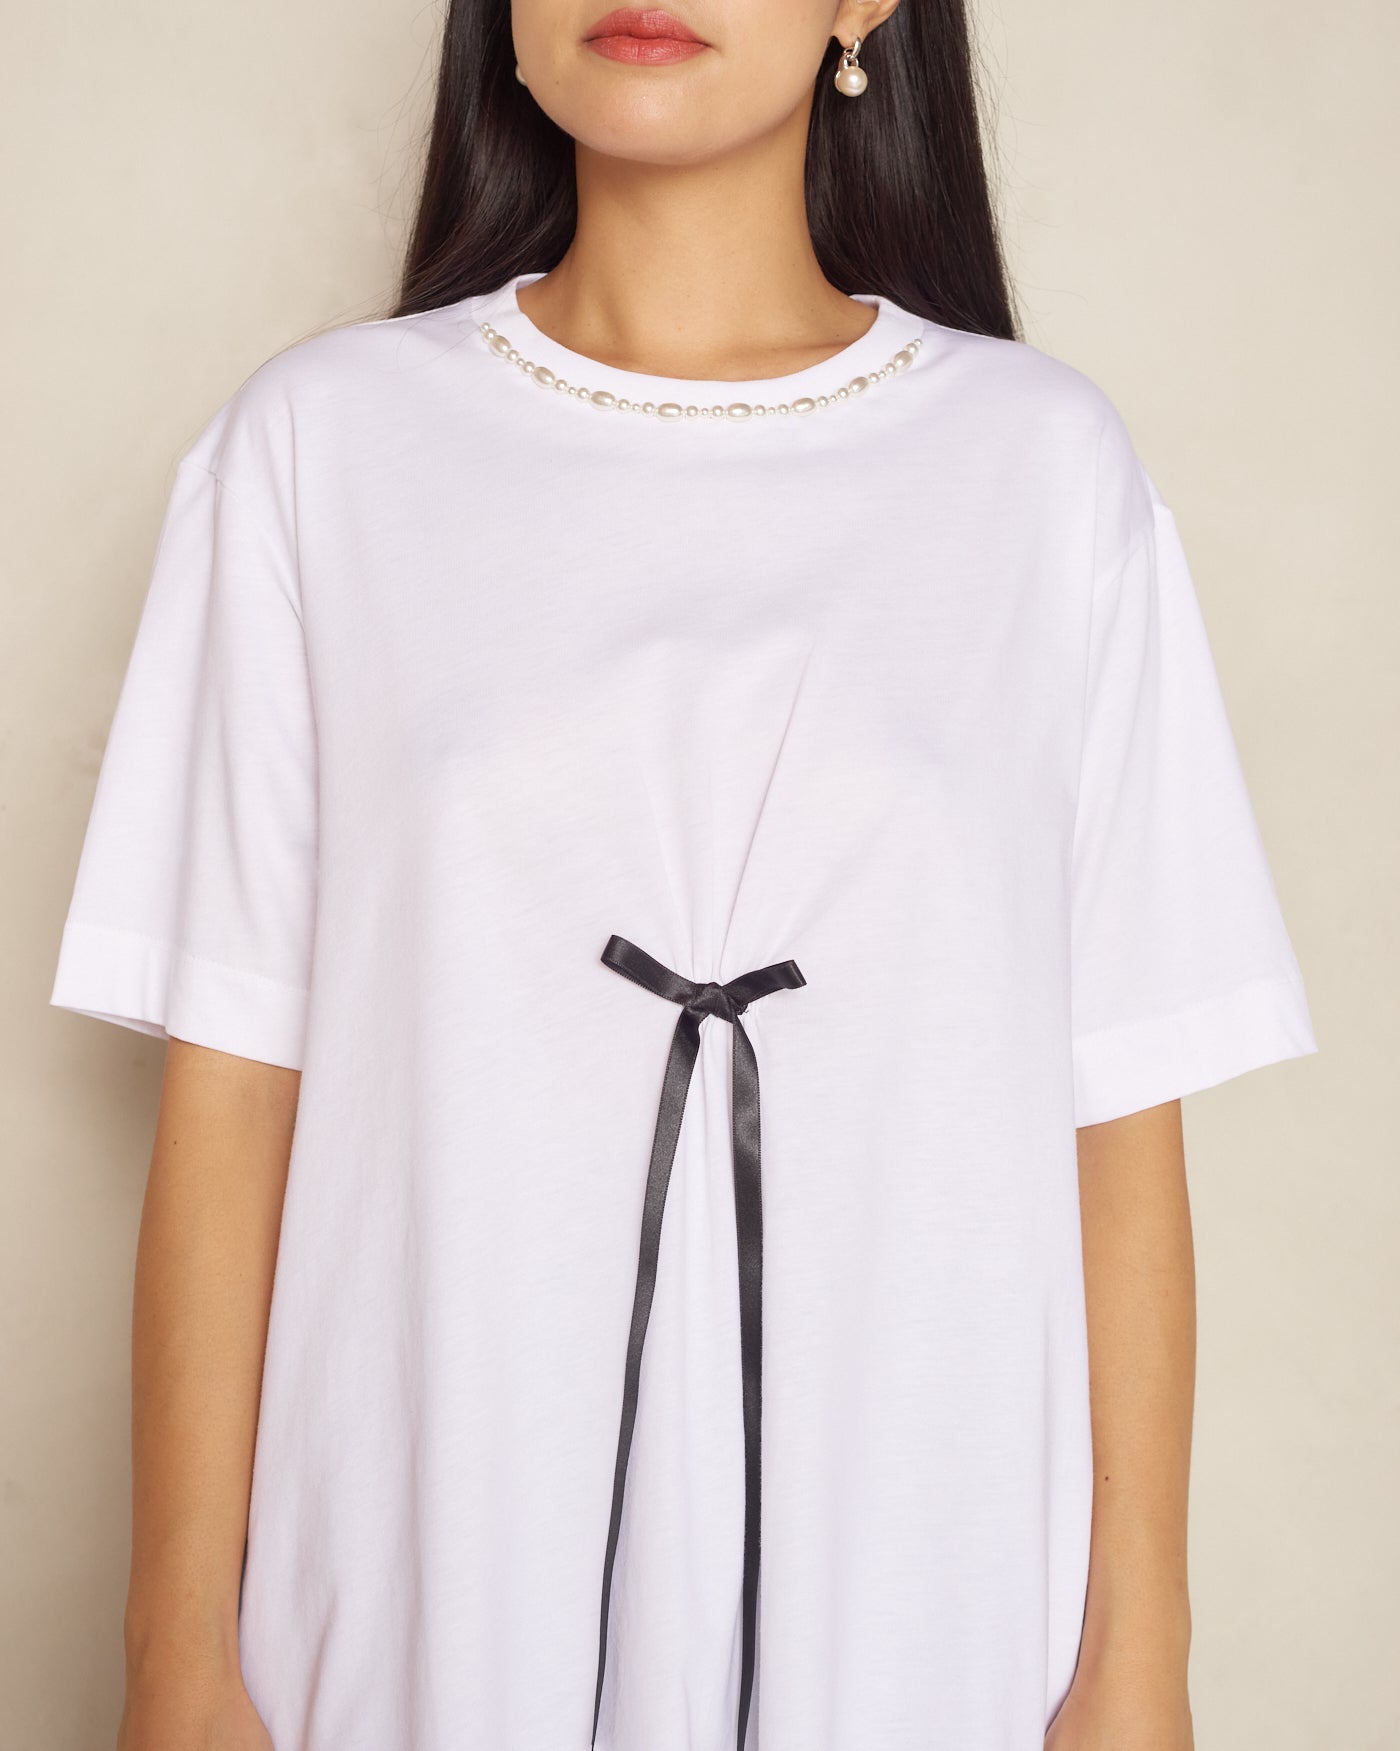 Pearl Bow White T-Shirt